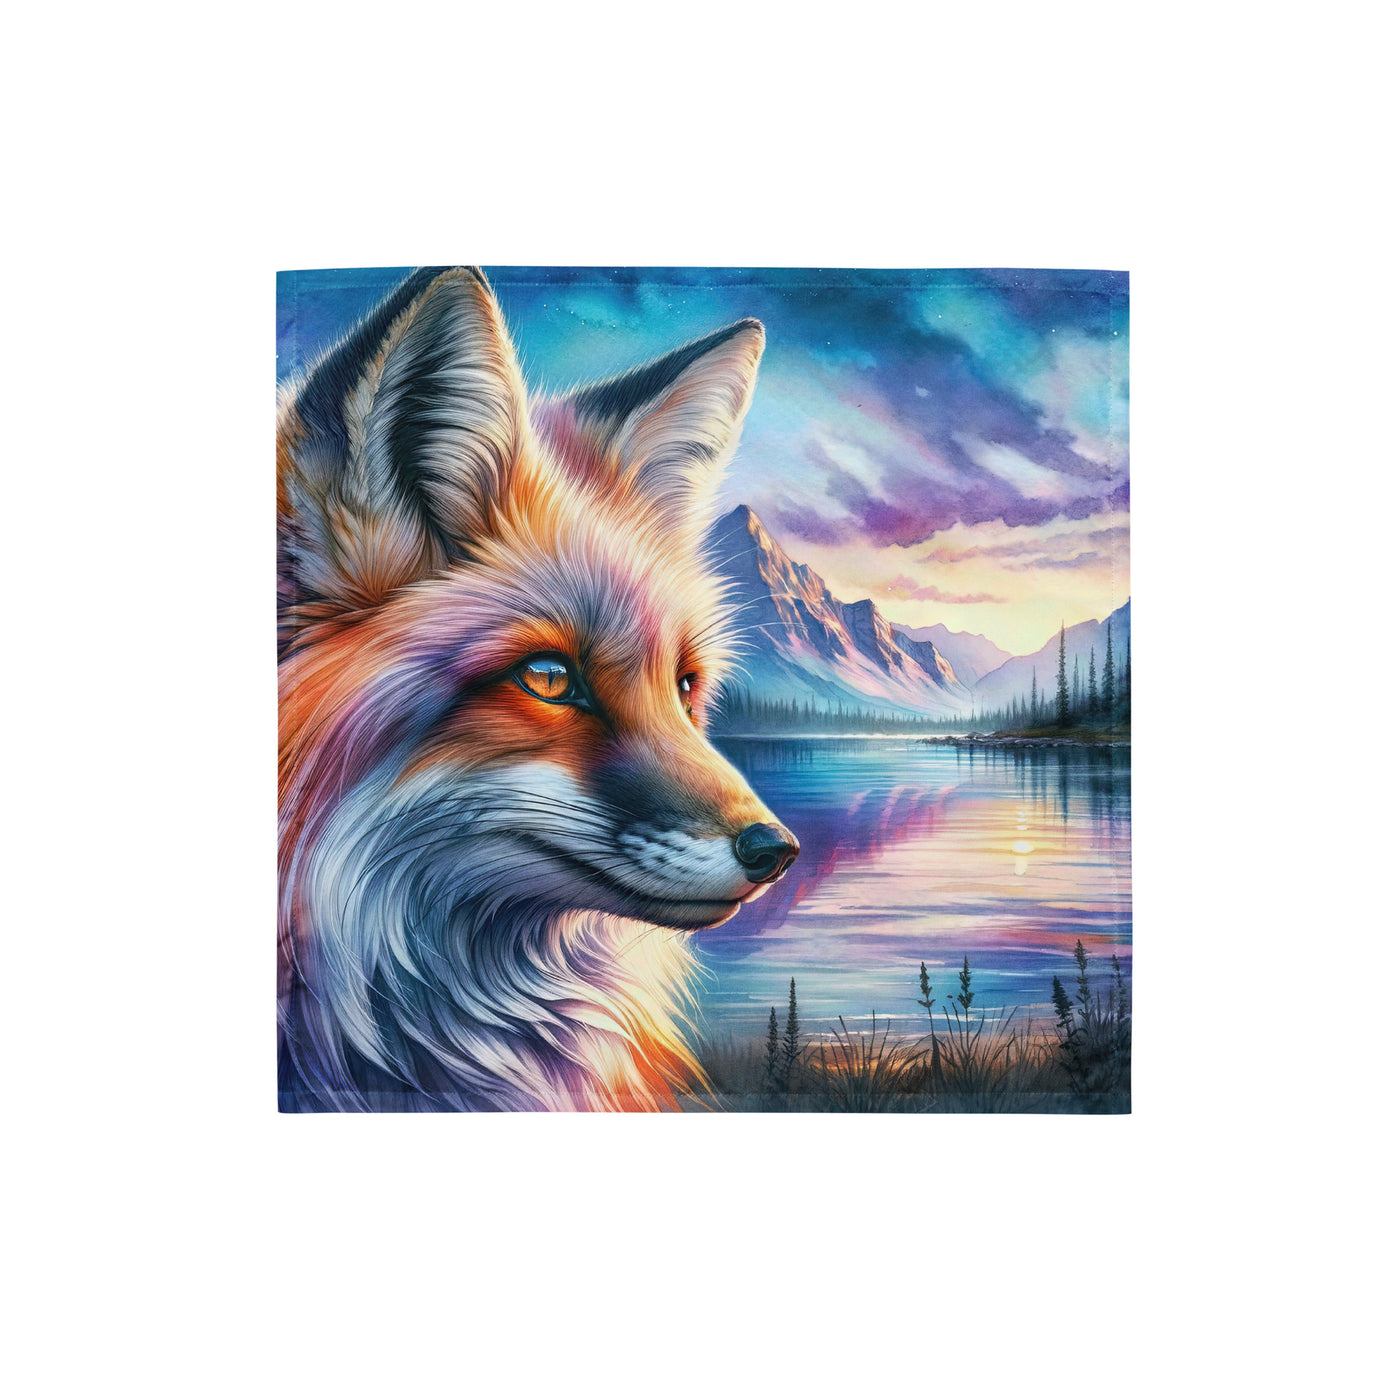 Aquarellporträt eines Fuchses im Dämmerlicht am Bergsee - Bandana (All-Over Print) camping xxx yyy zzz S